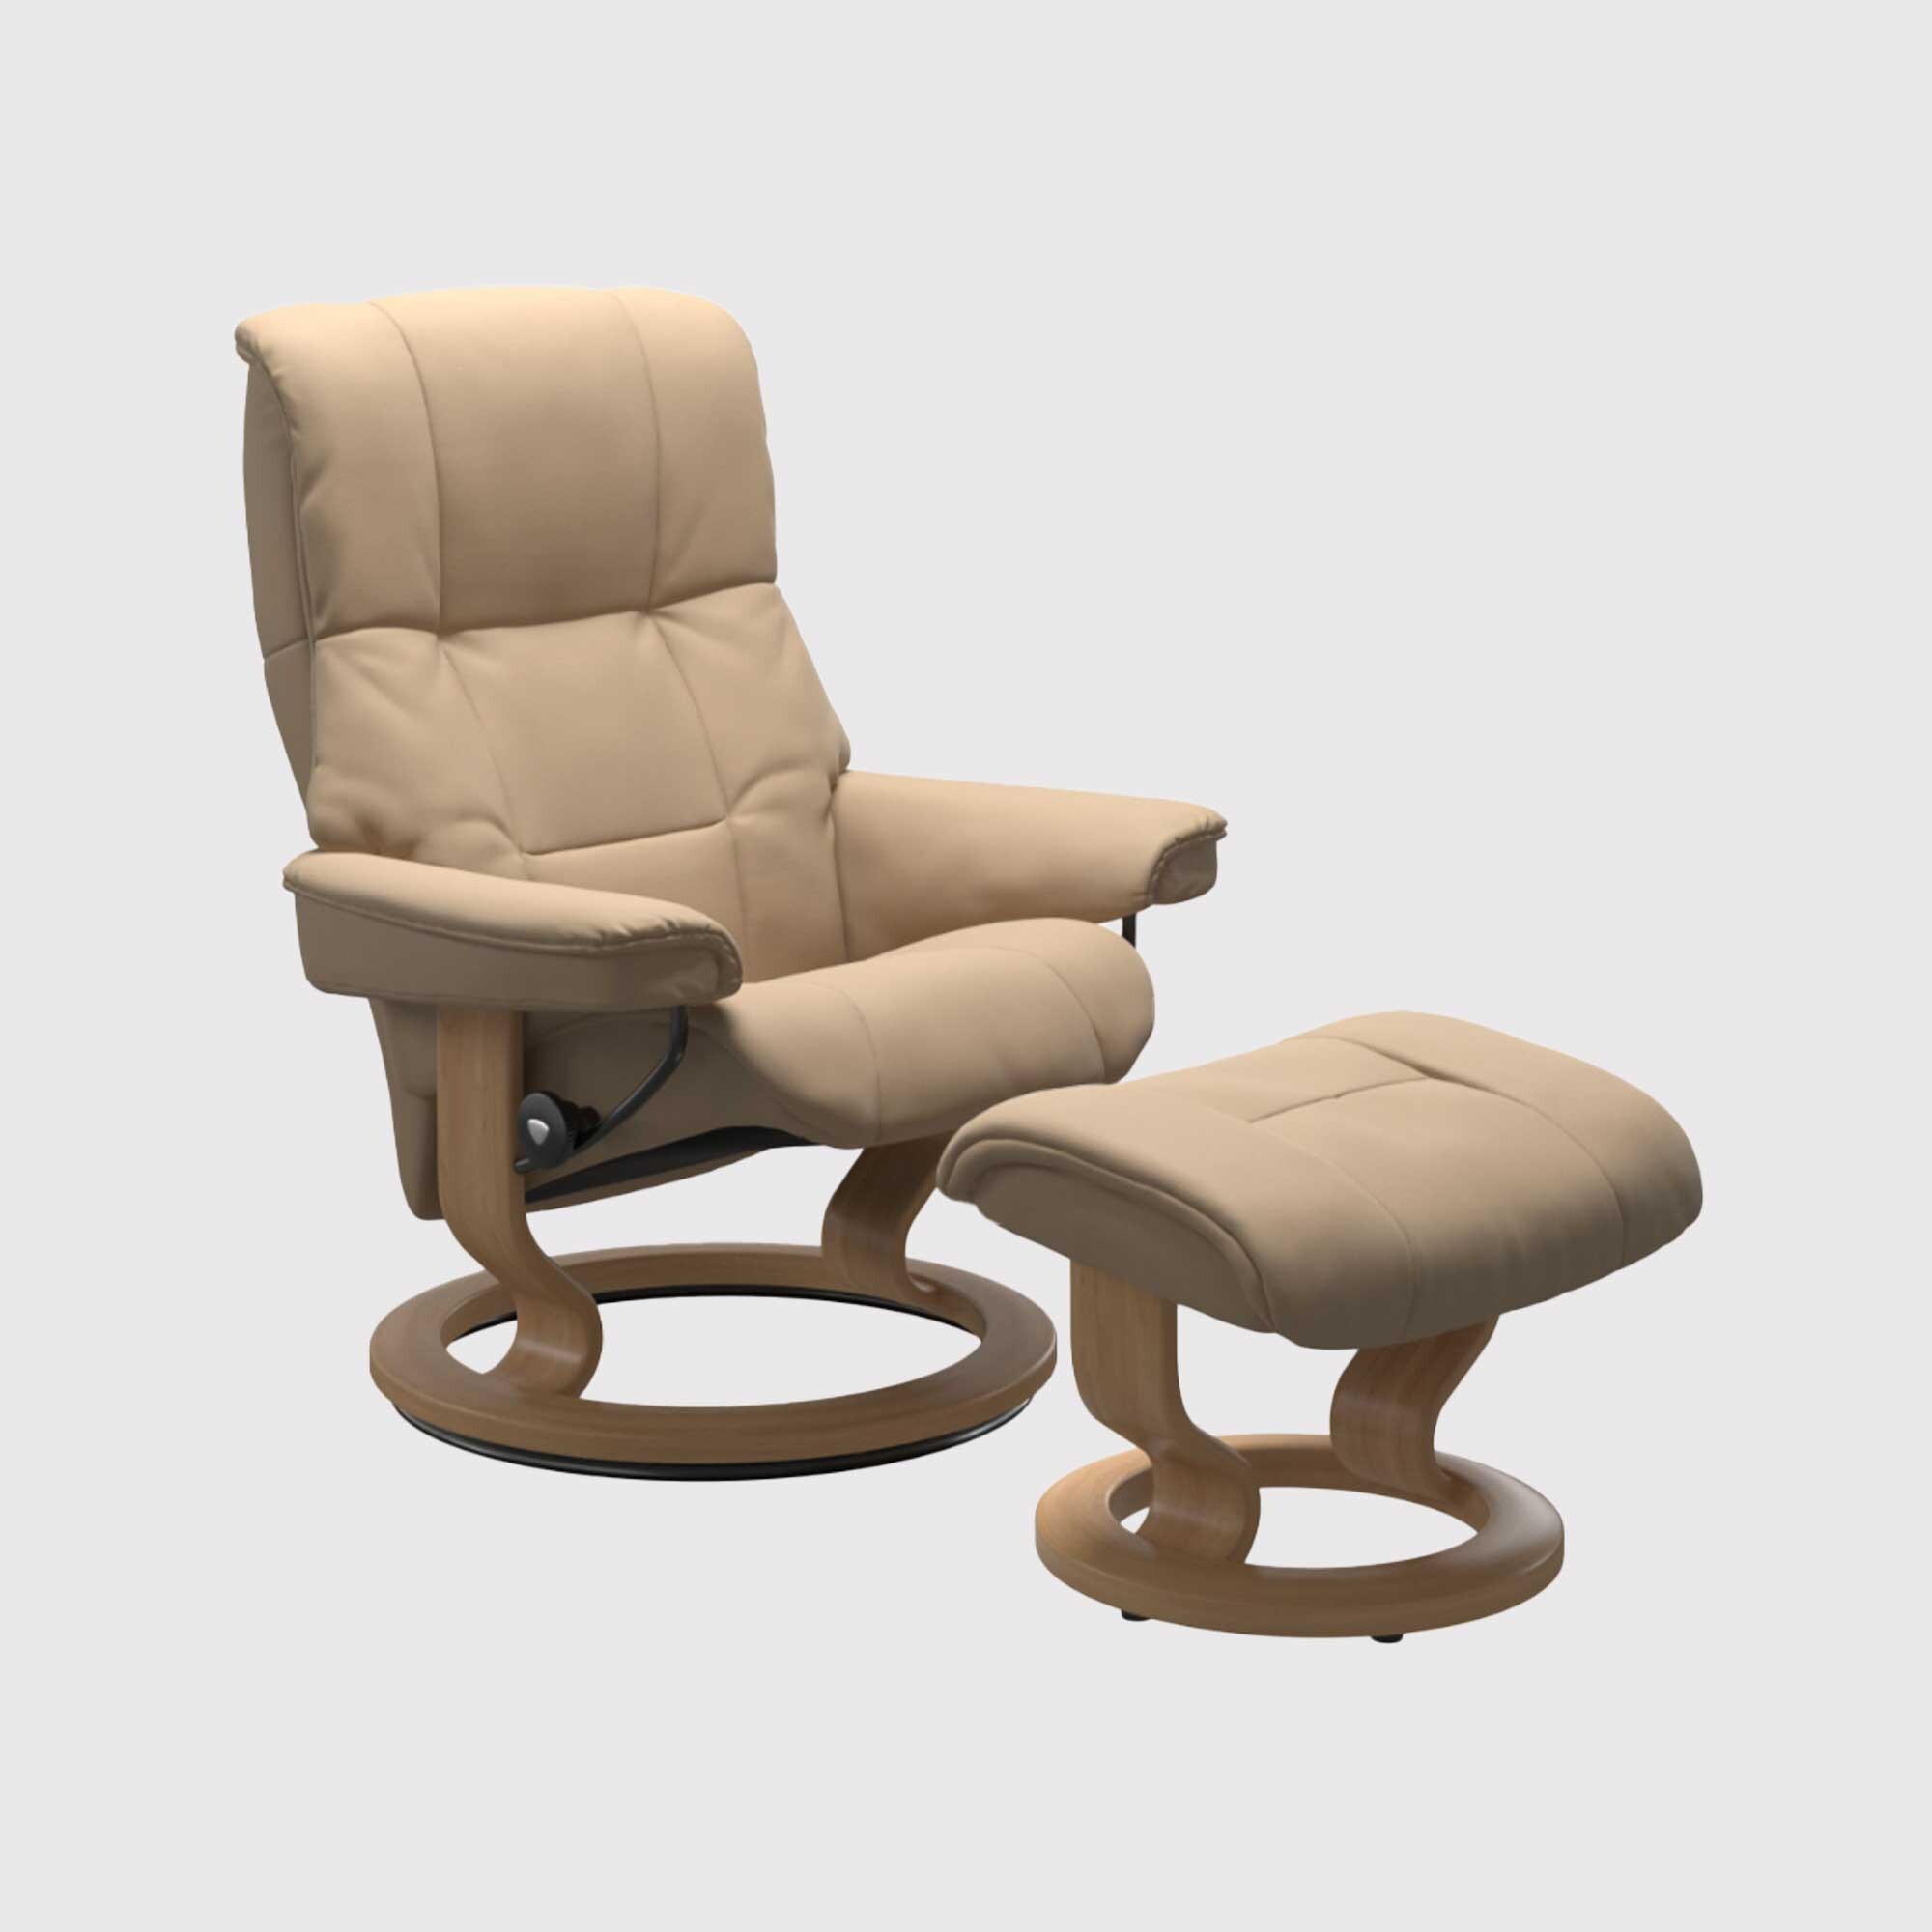 Stressless Mayfair Medium Classic Recliner Chair w/footstool, Neutral Leather | Barker & Stonehouse